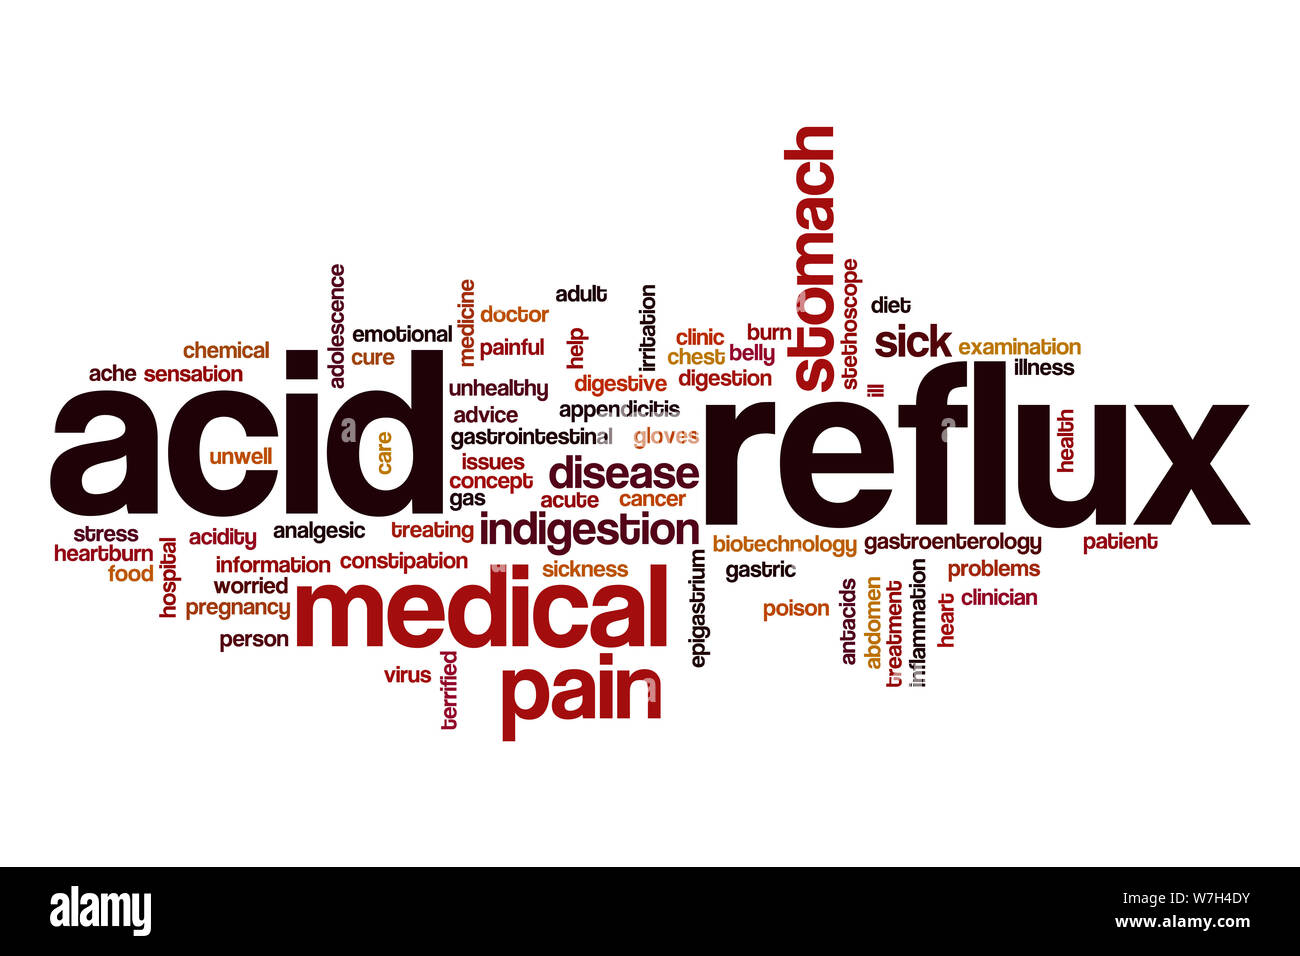 Acid reflux word cloud Stock Photo